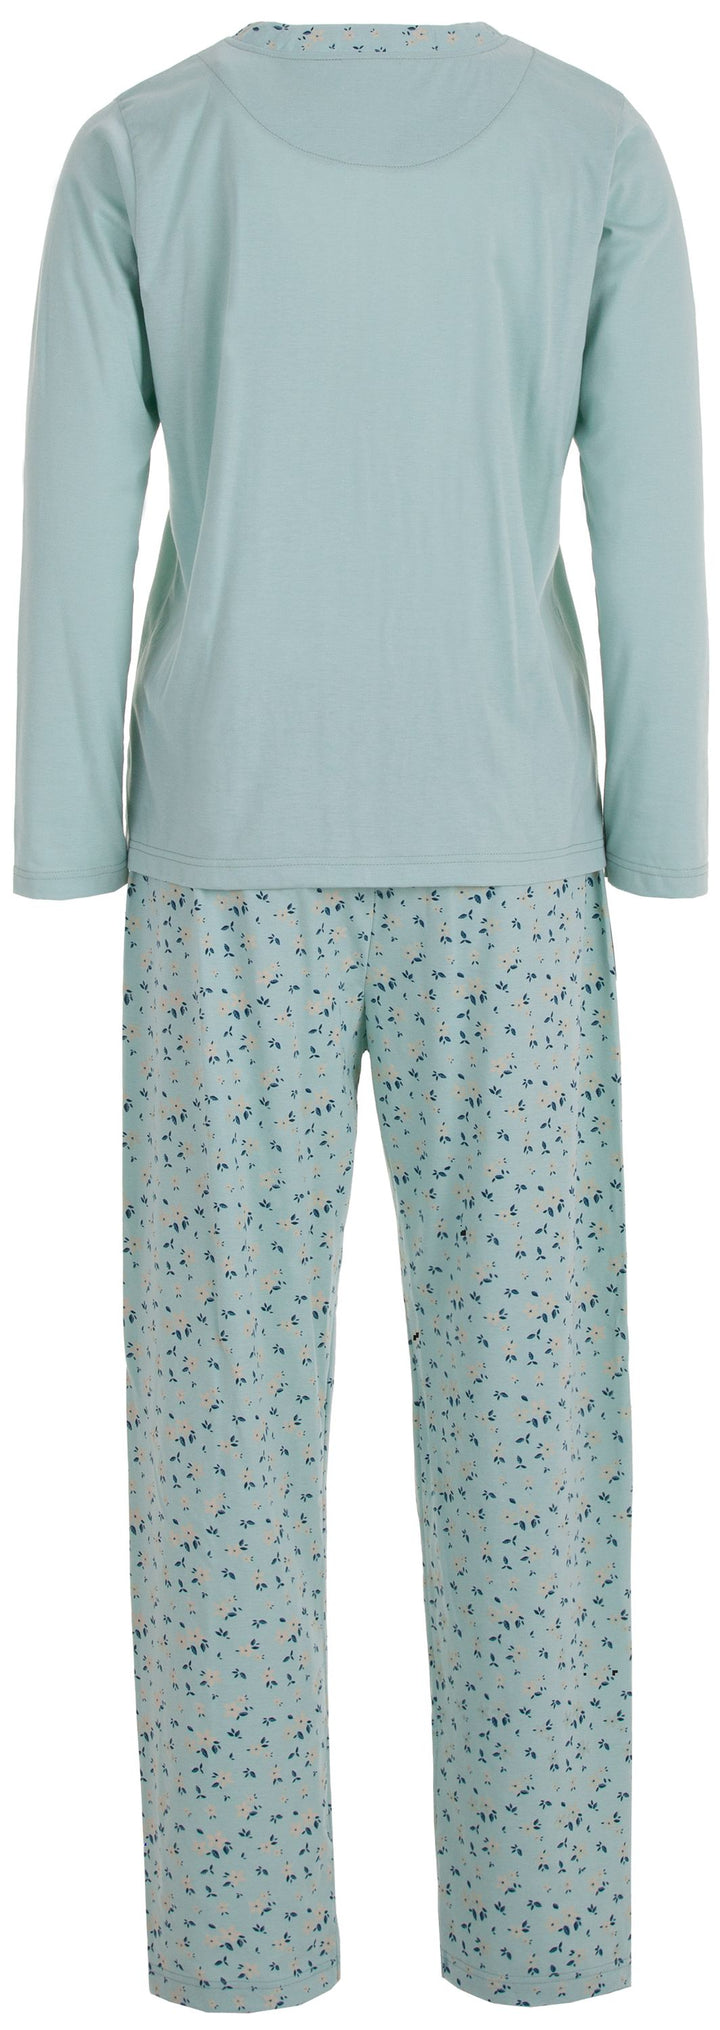 Pyjama Set Langarm - Borte Blüte